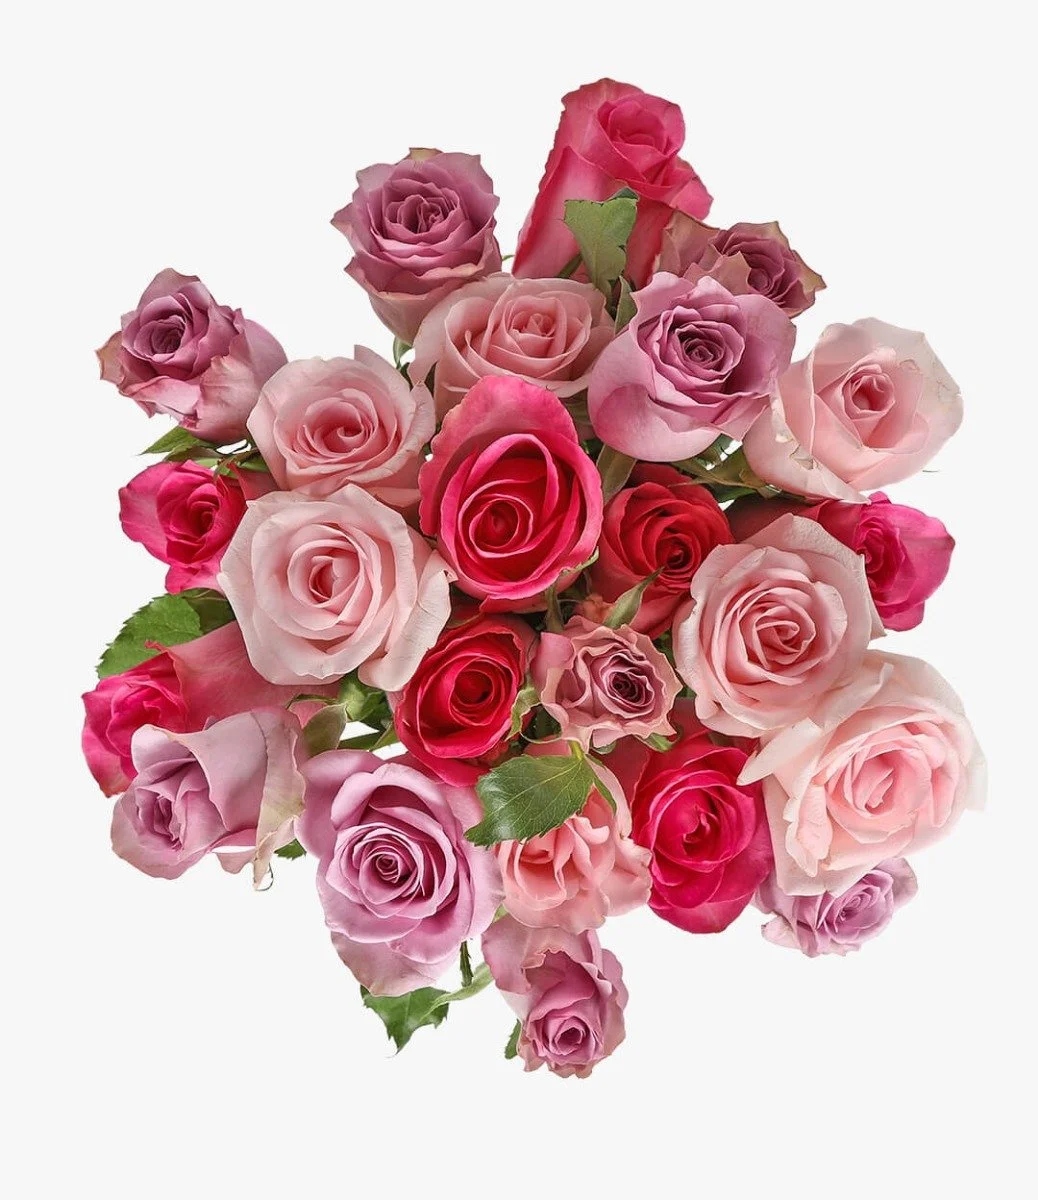 Shades of Pink Roses Arrangement